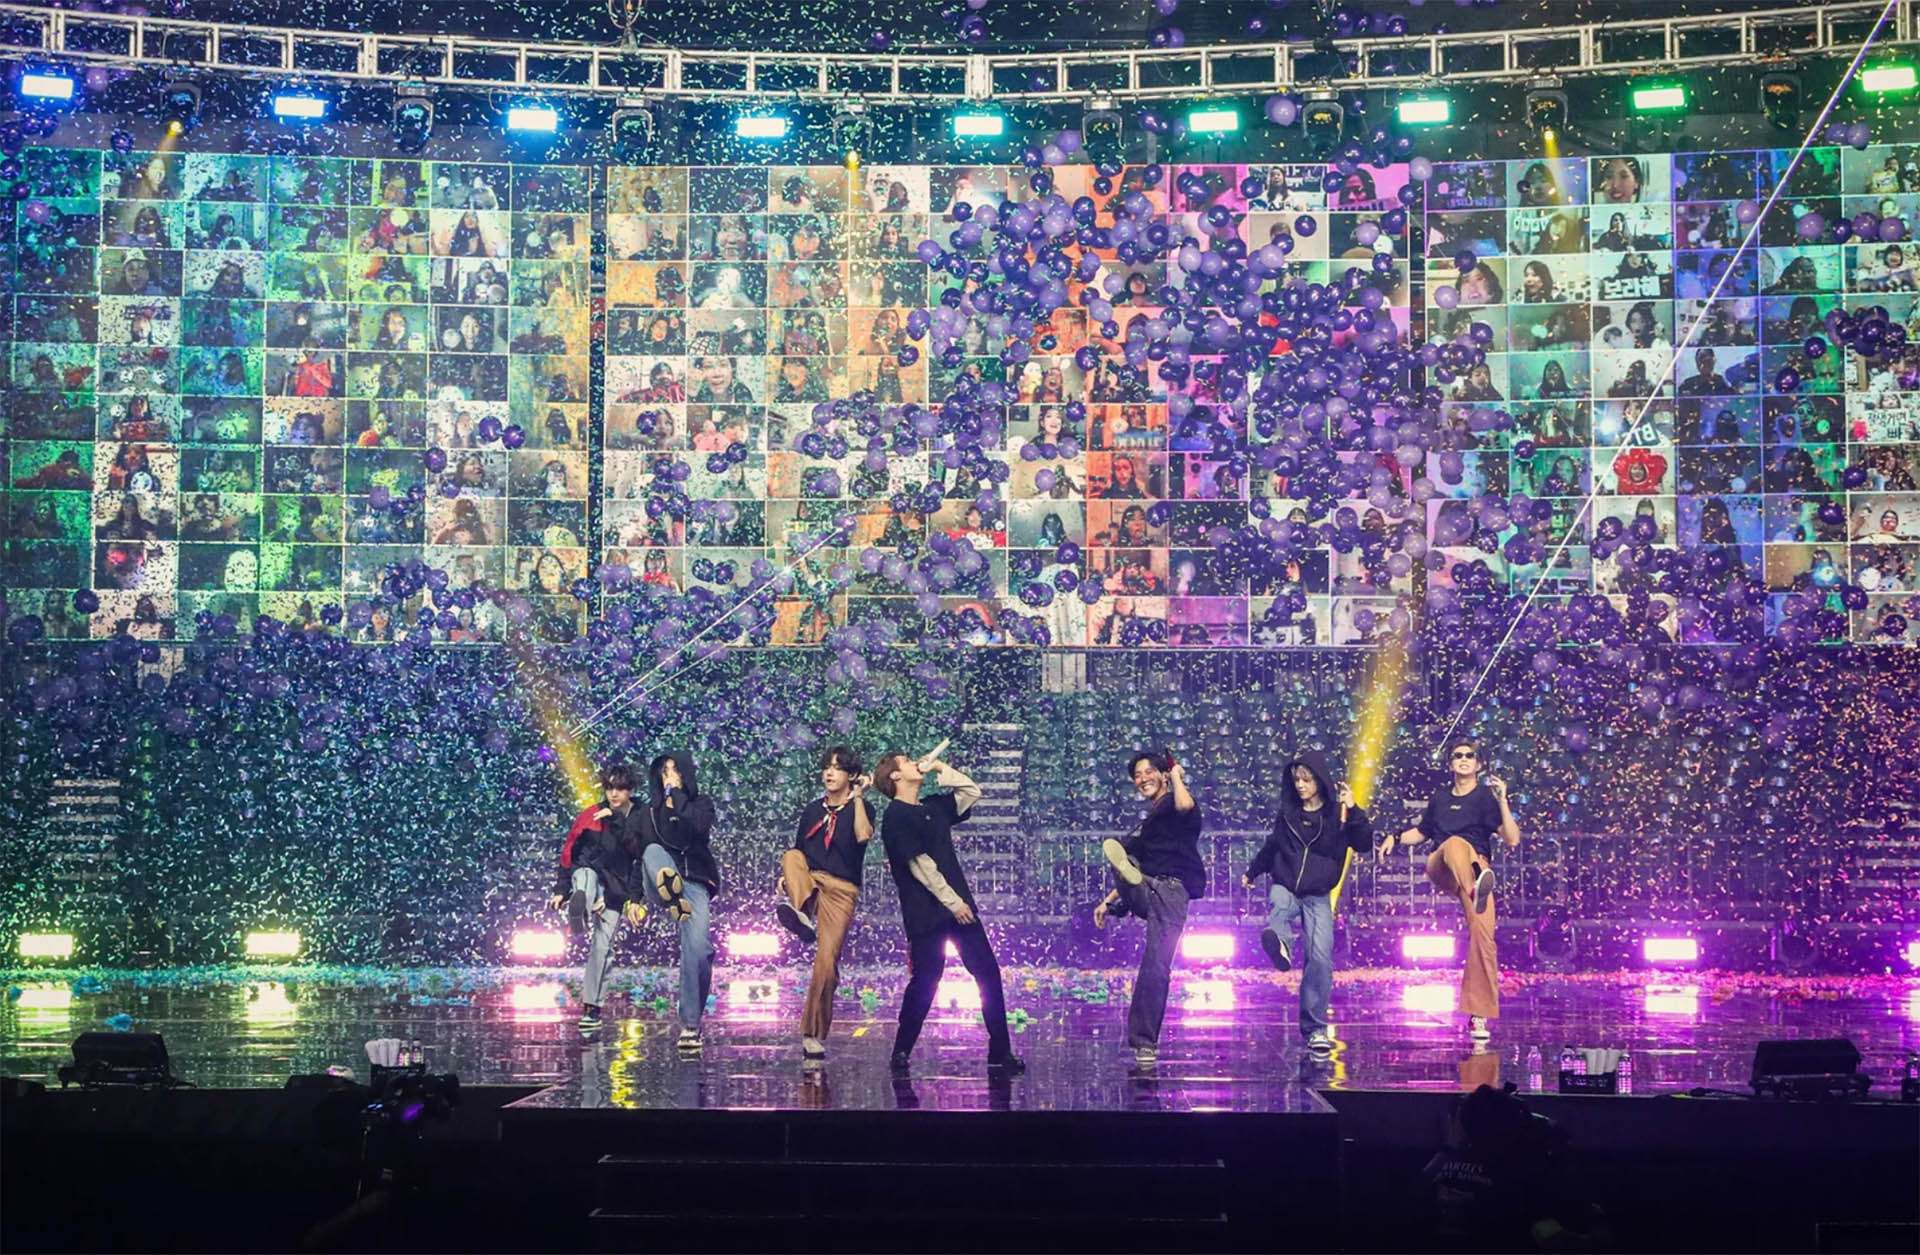 Concert: BTS, Big Hit's year-end concert, The best-selling album in Korean history. 1920x1260 HD Wallpaper.